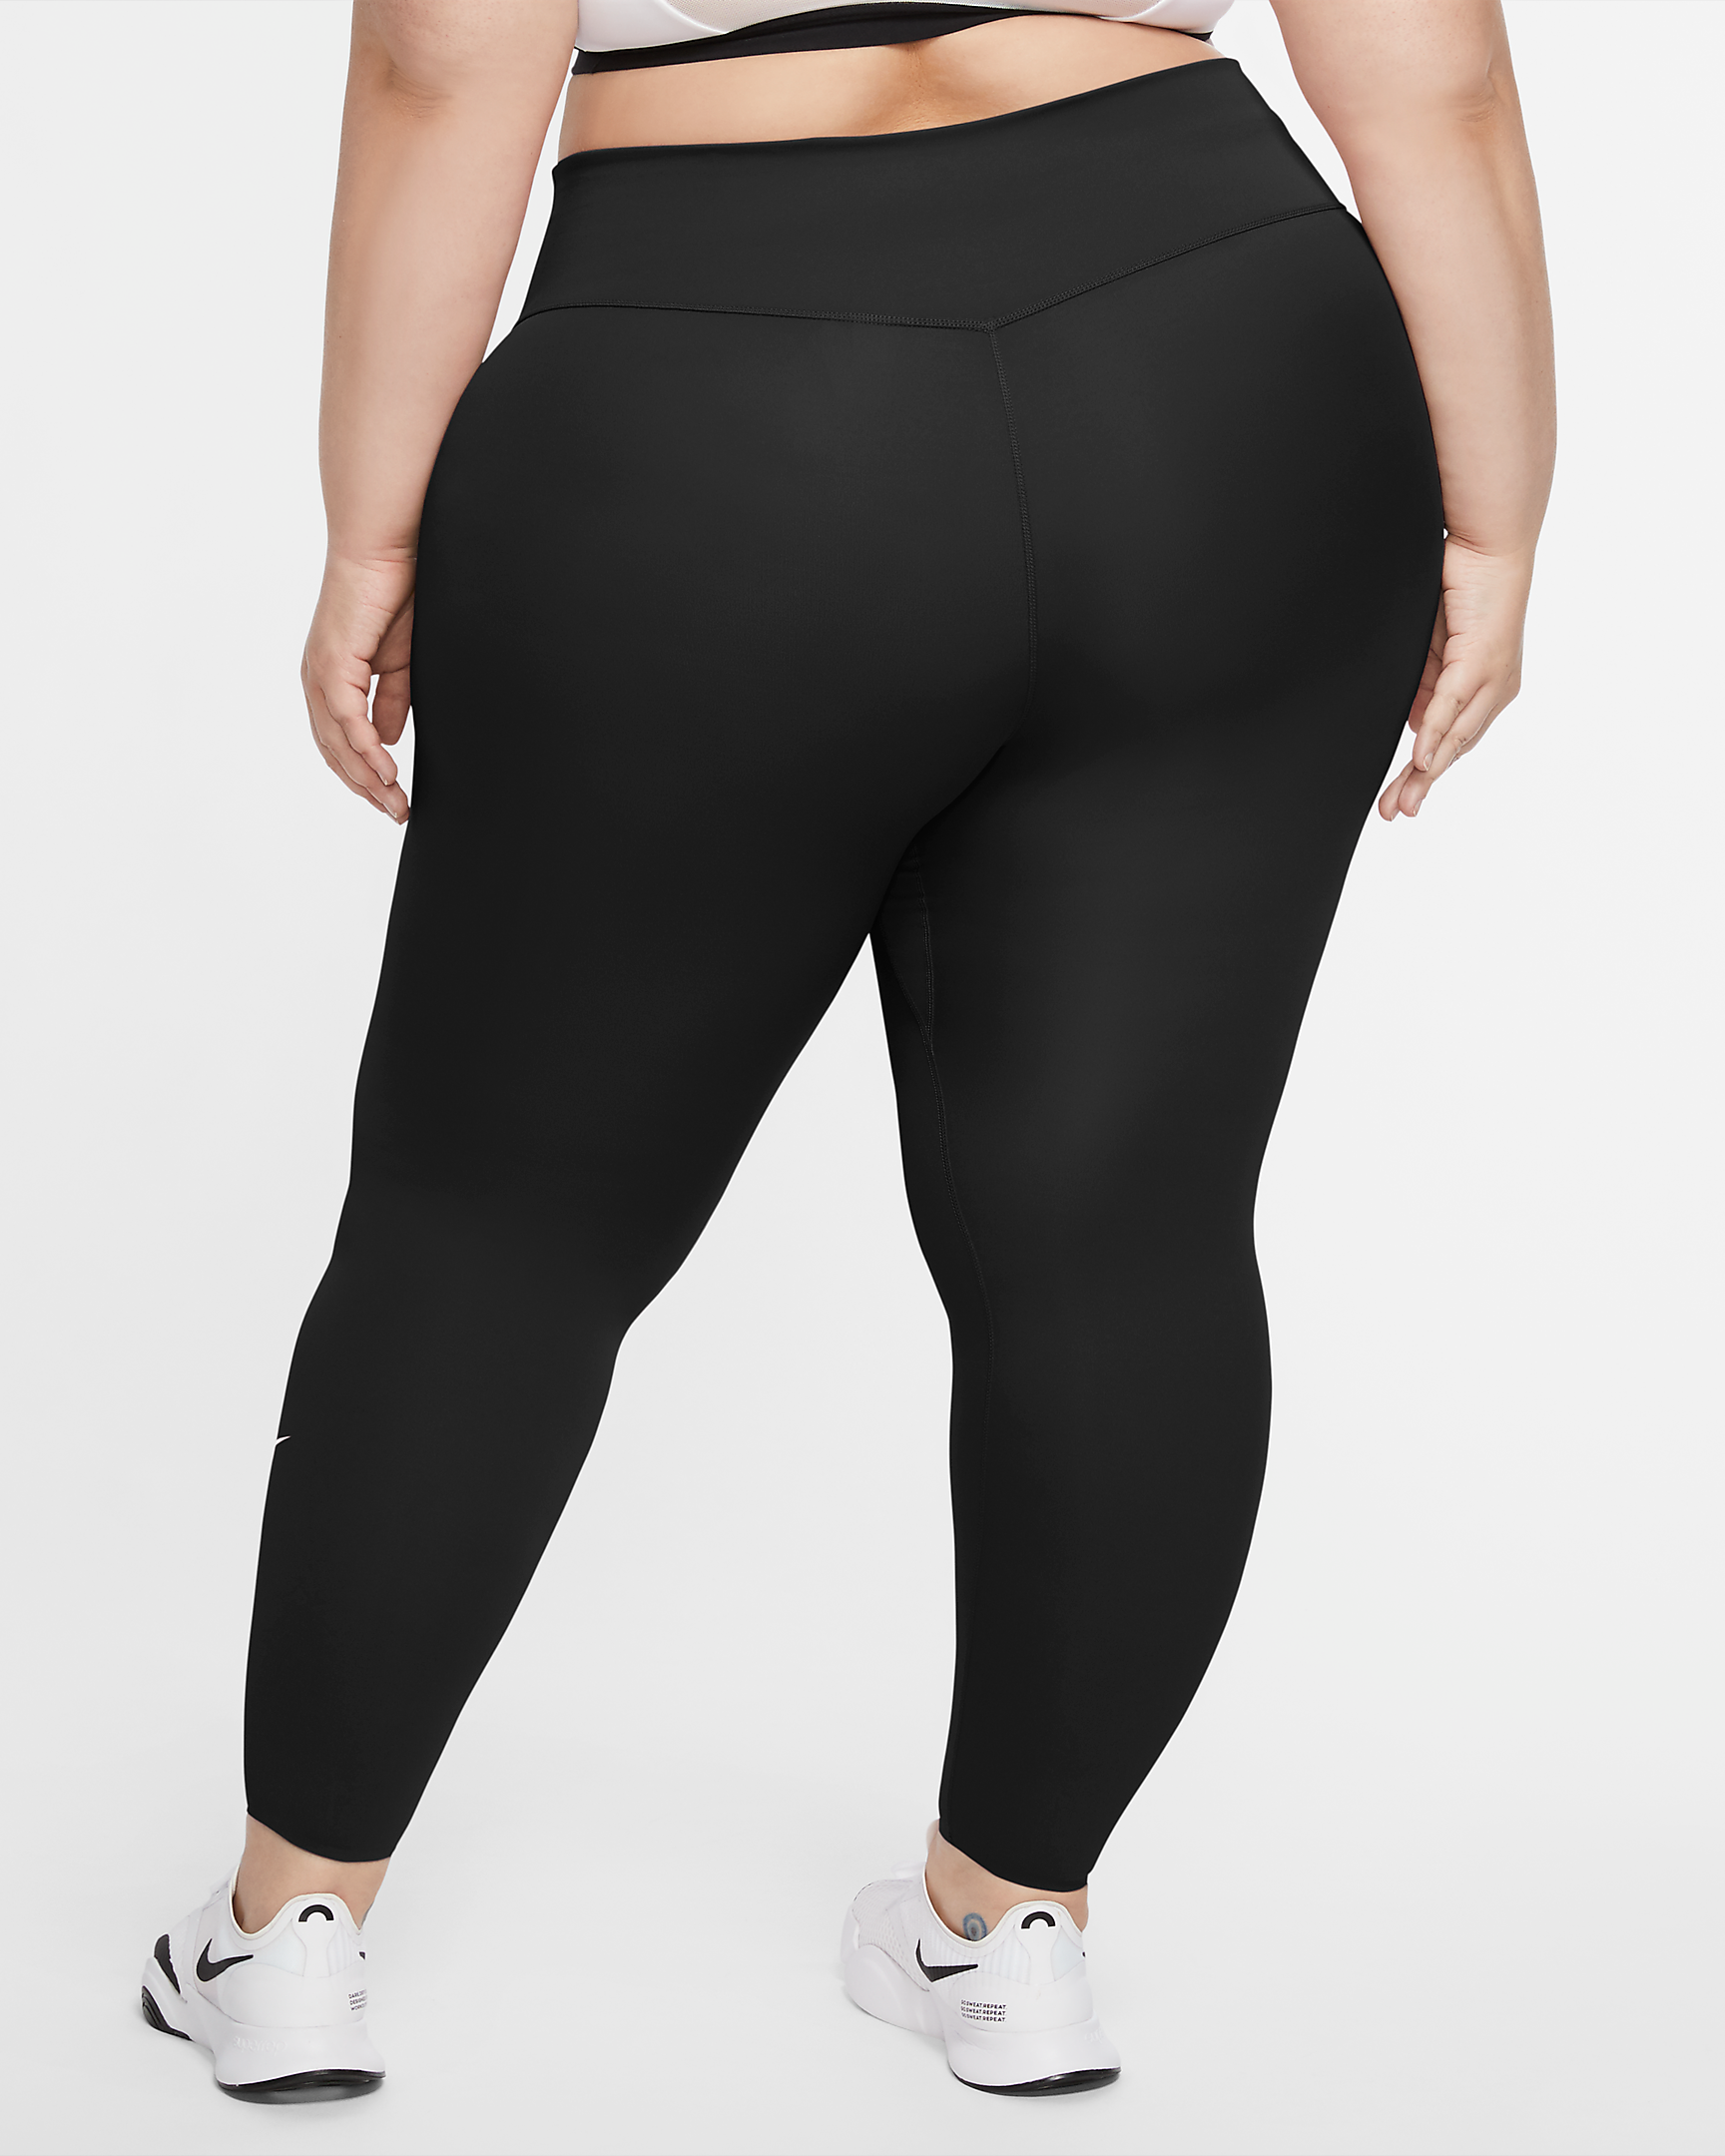 Women's Nike Icon Clash Fast Training Outfit Bra Leggings Set Plus Size 1X  New | eBay